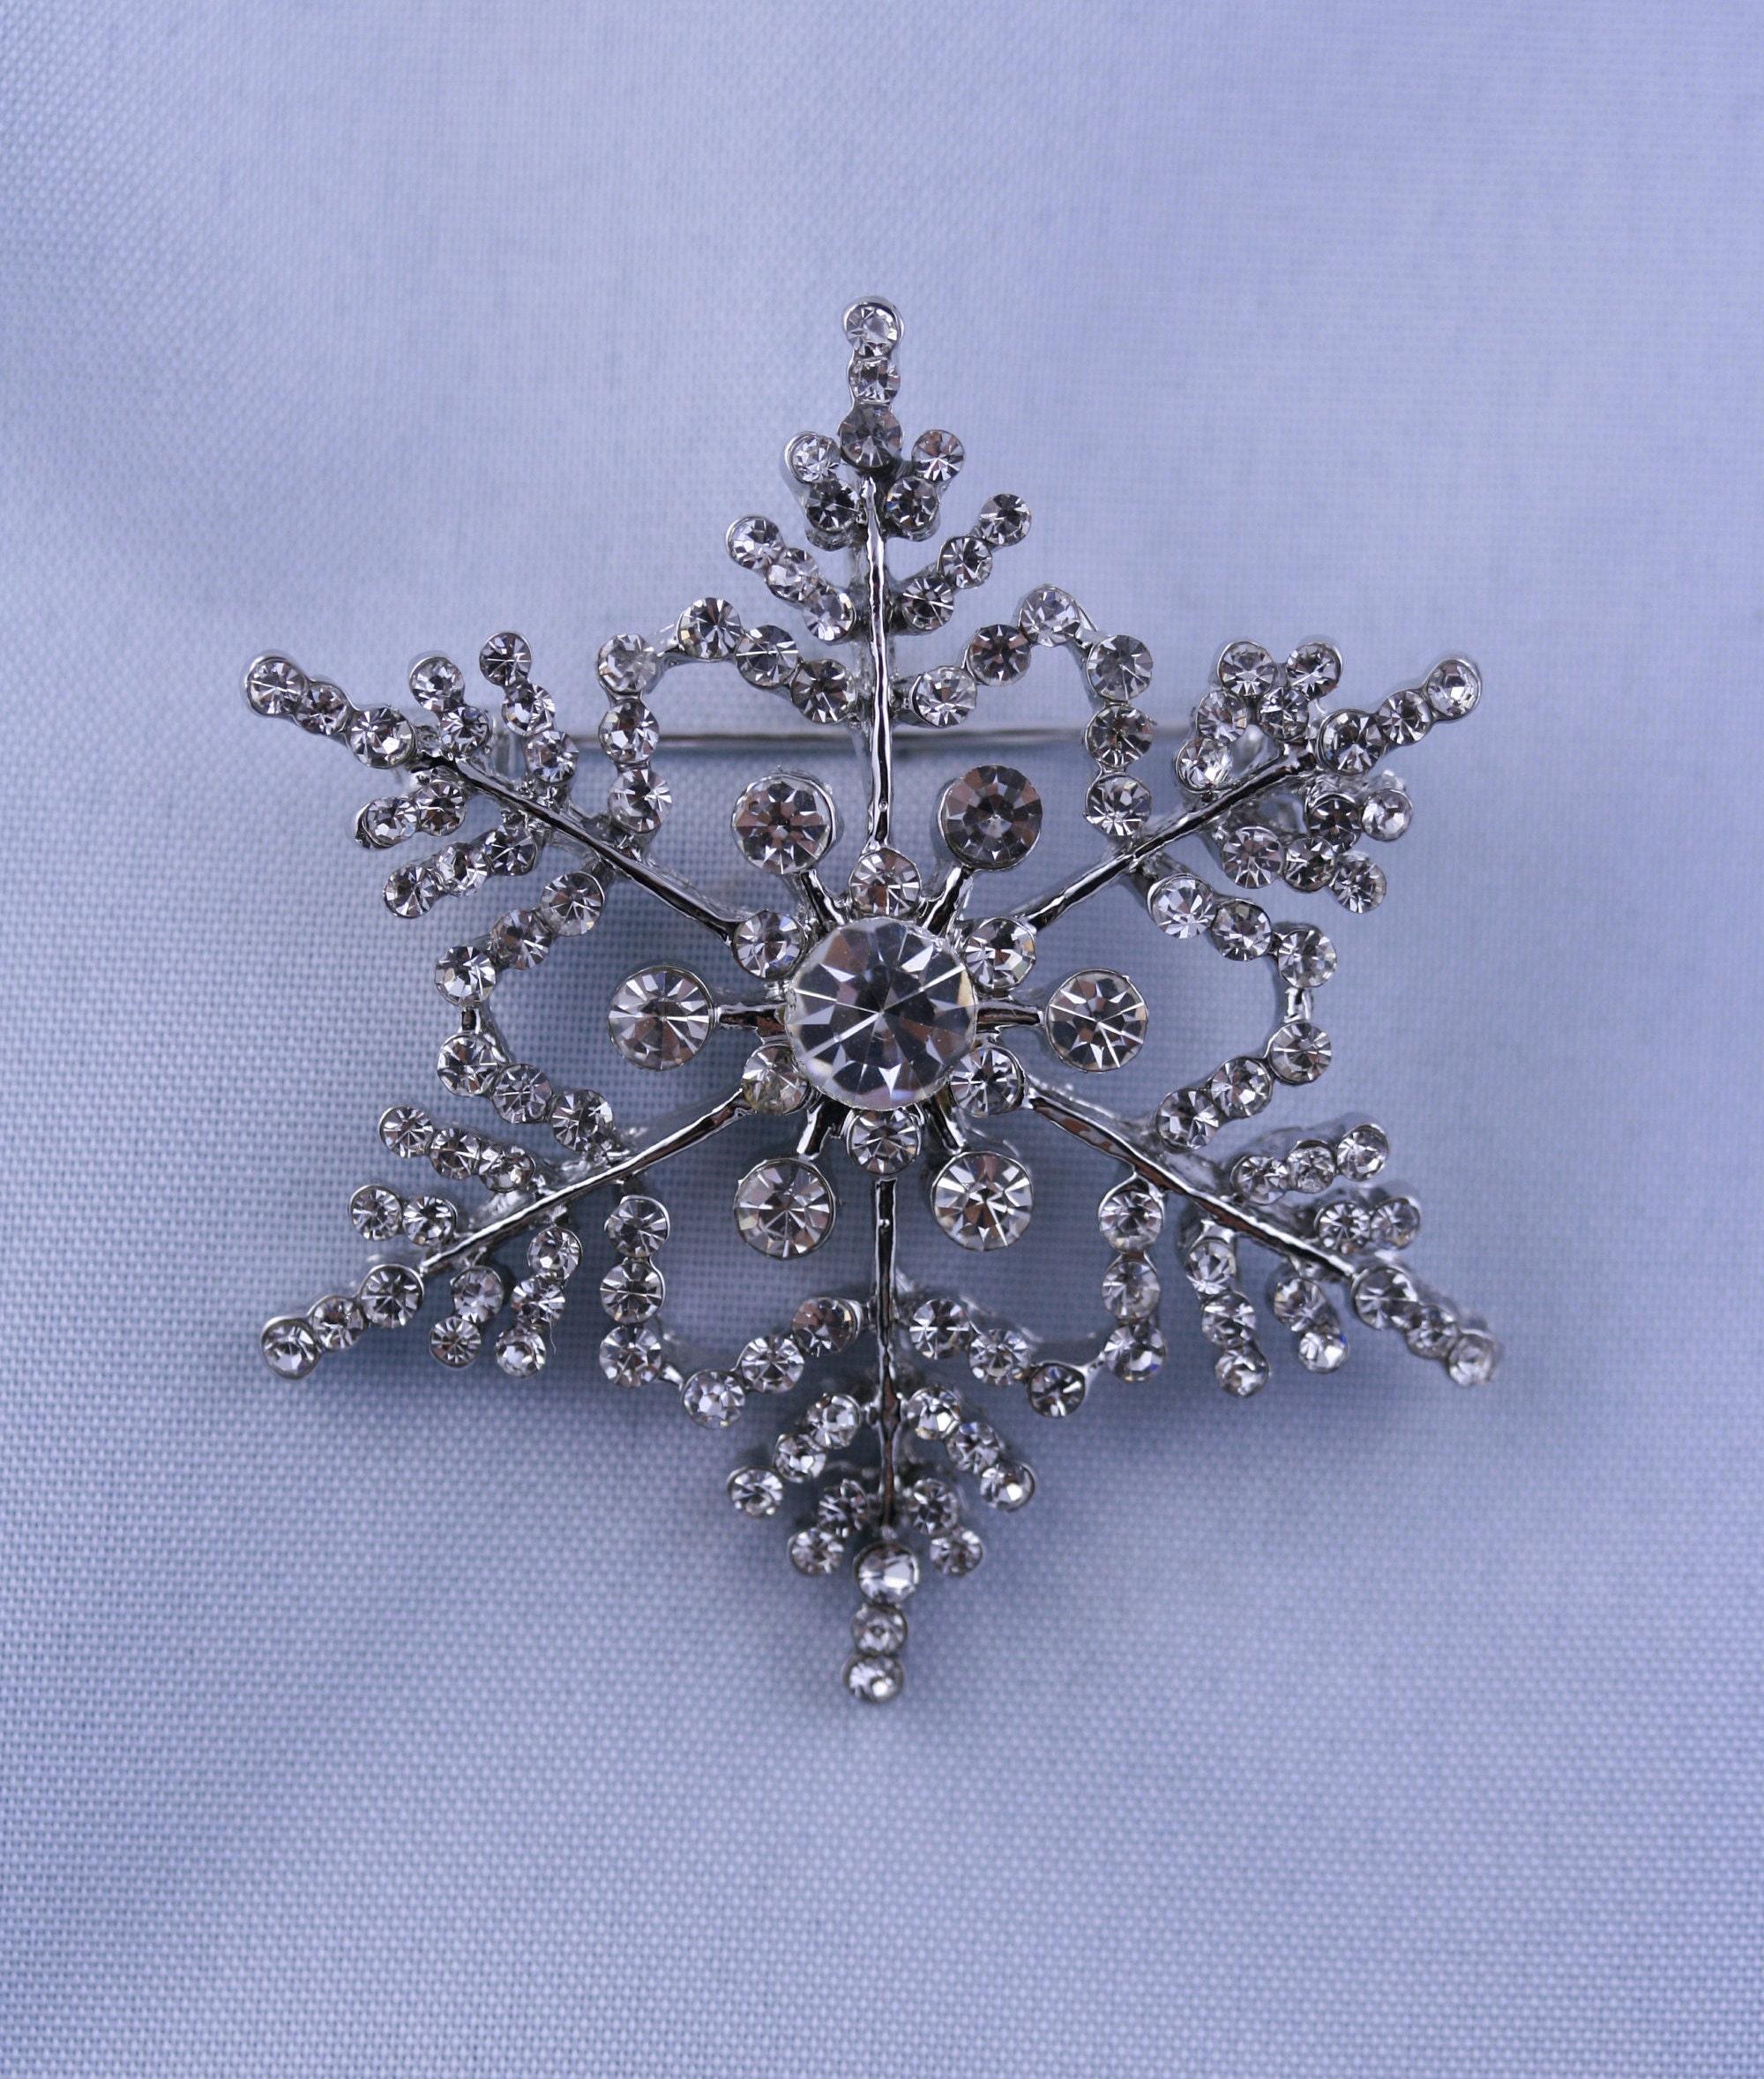 Sisslia Handmade Gold Snowflake Brooch Rhinestone Brooch Broach Large Flower Brooch Pins for Women Designer Jewelry Large Brooches for Women Wedding